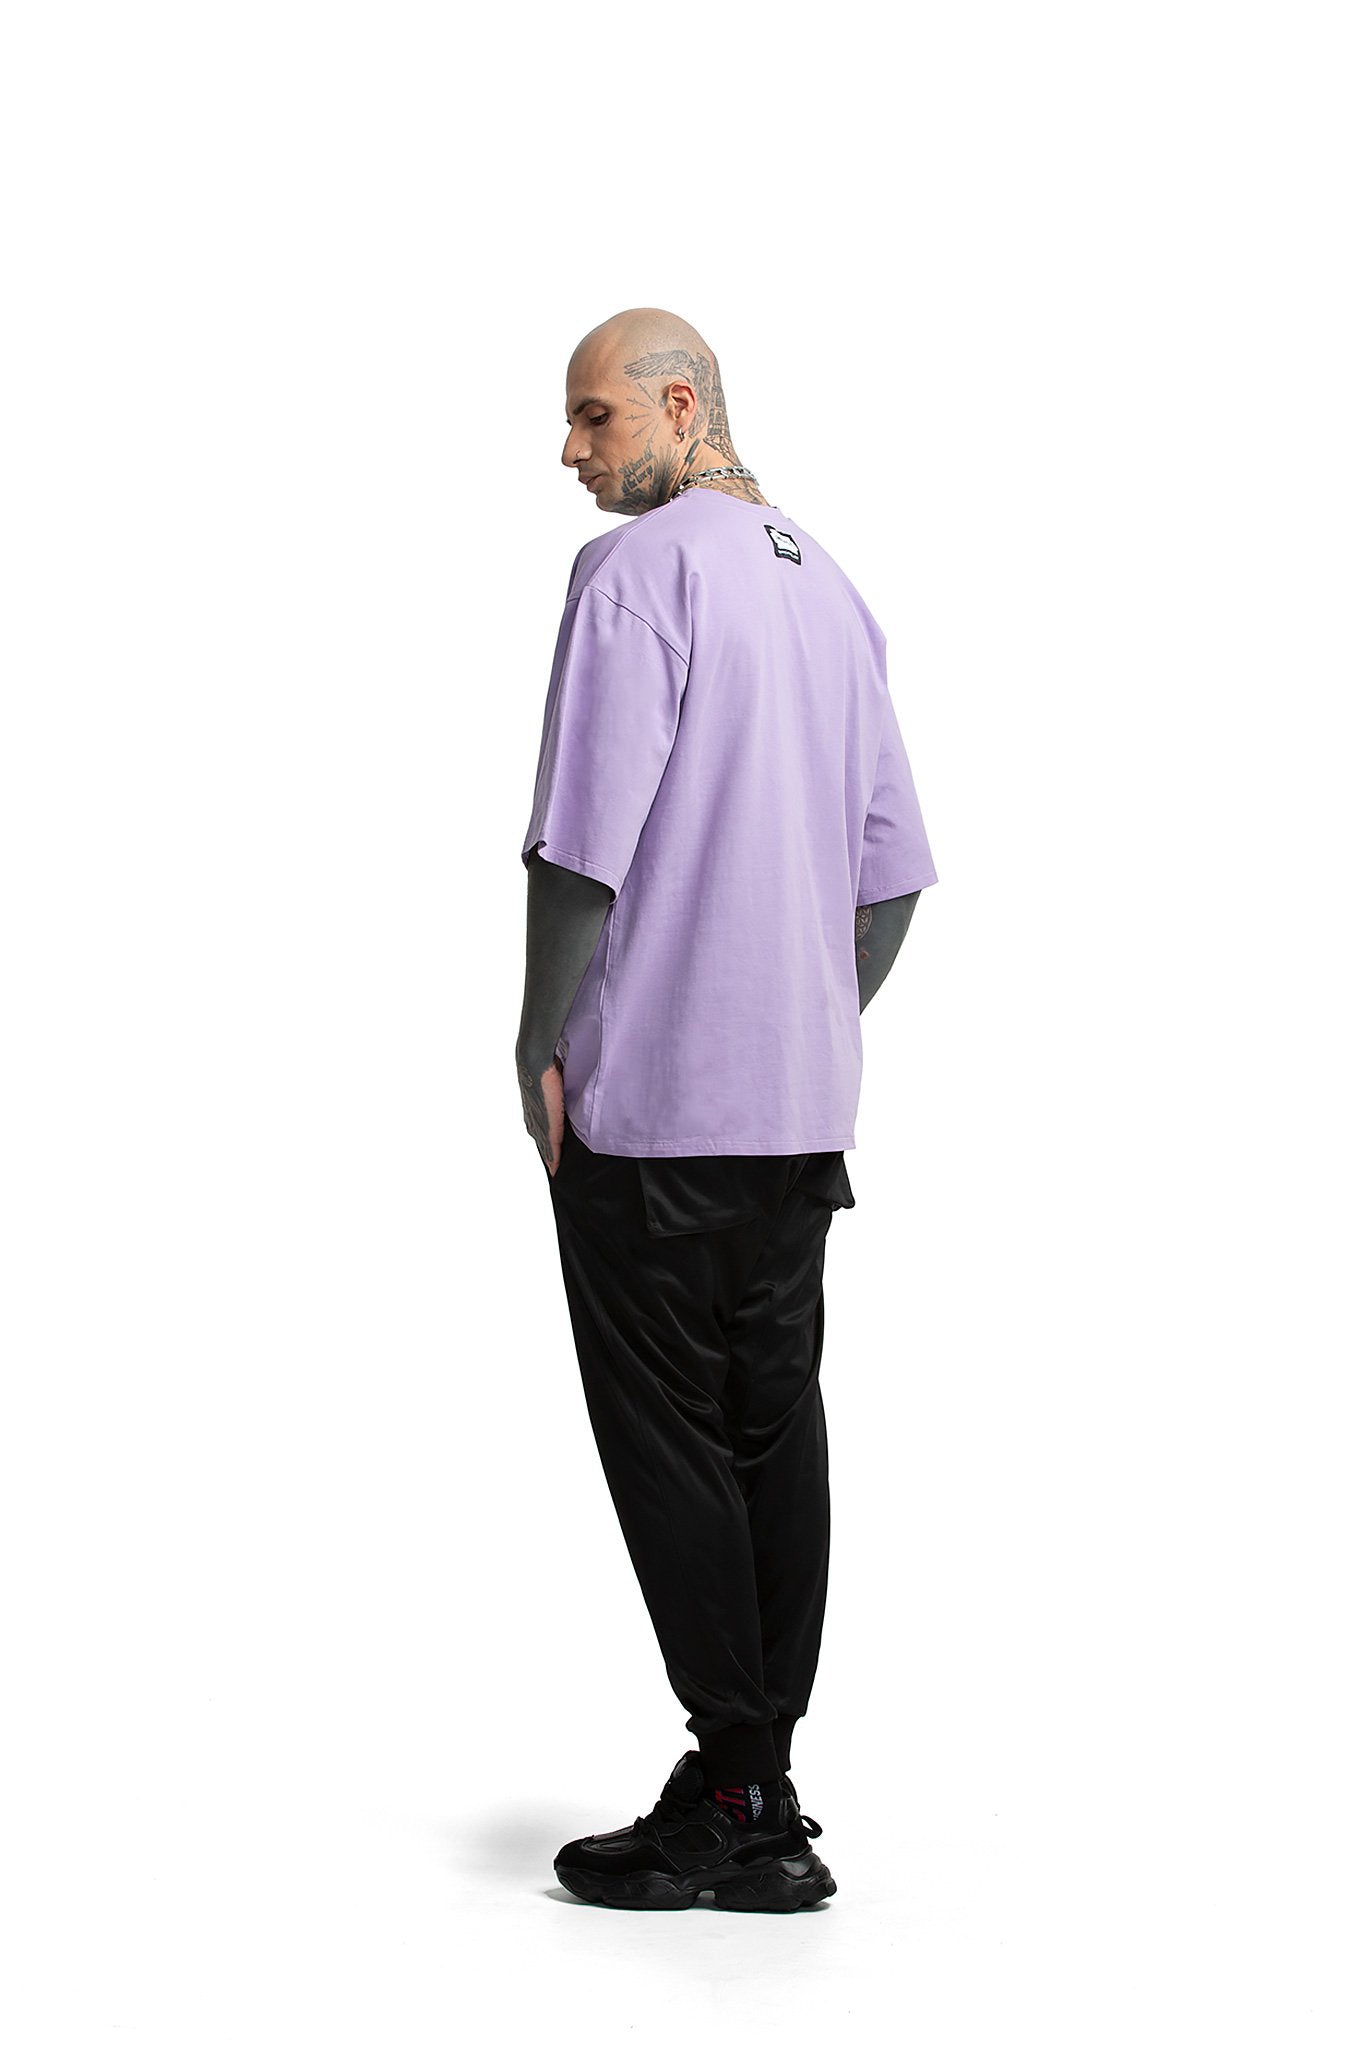 Techno Dragon oversized unisex T-shirt [purple]